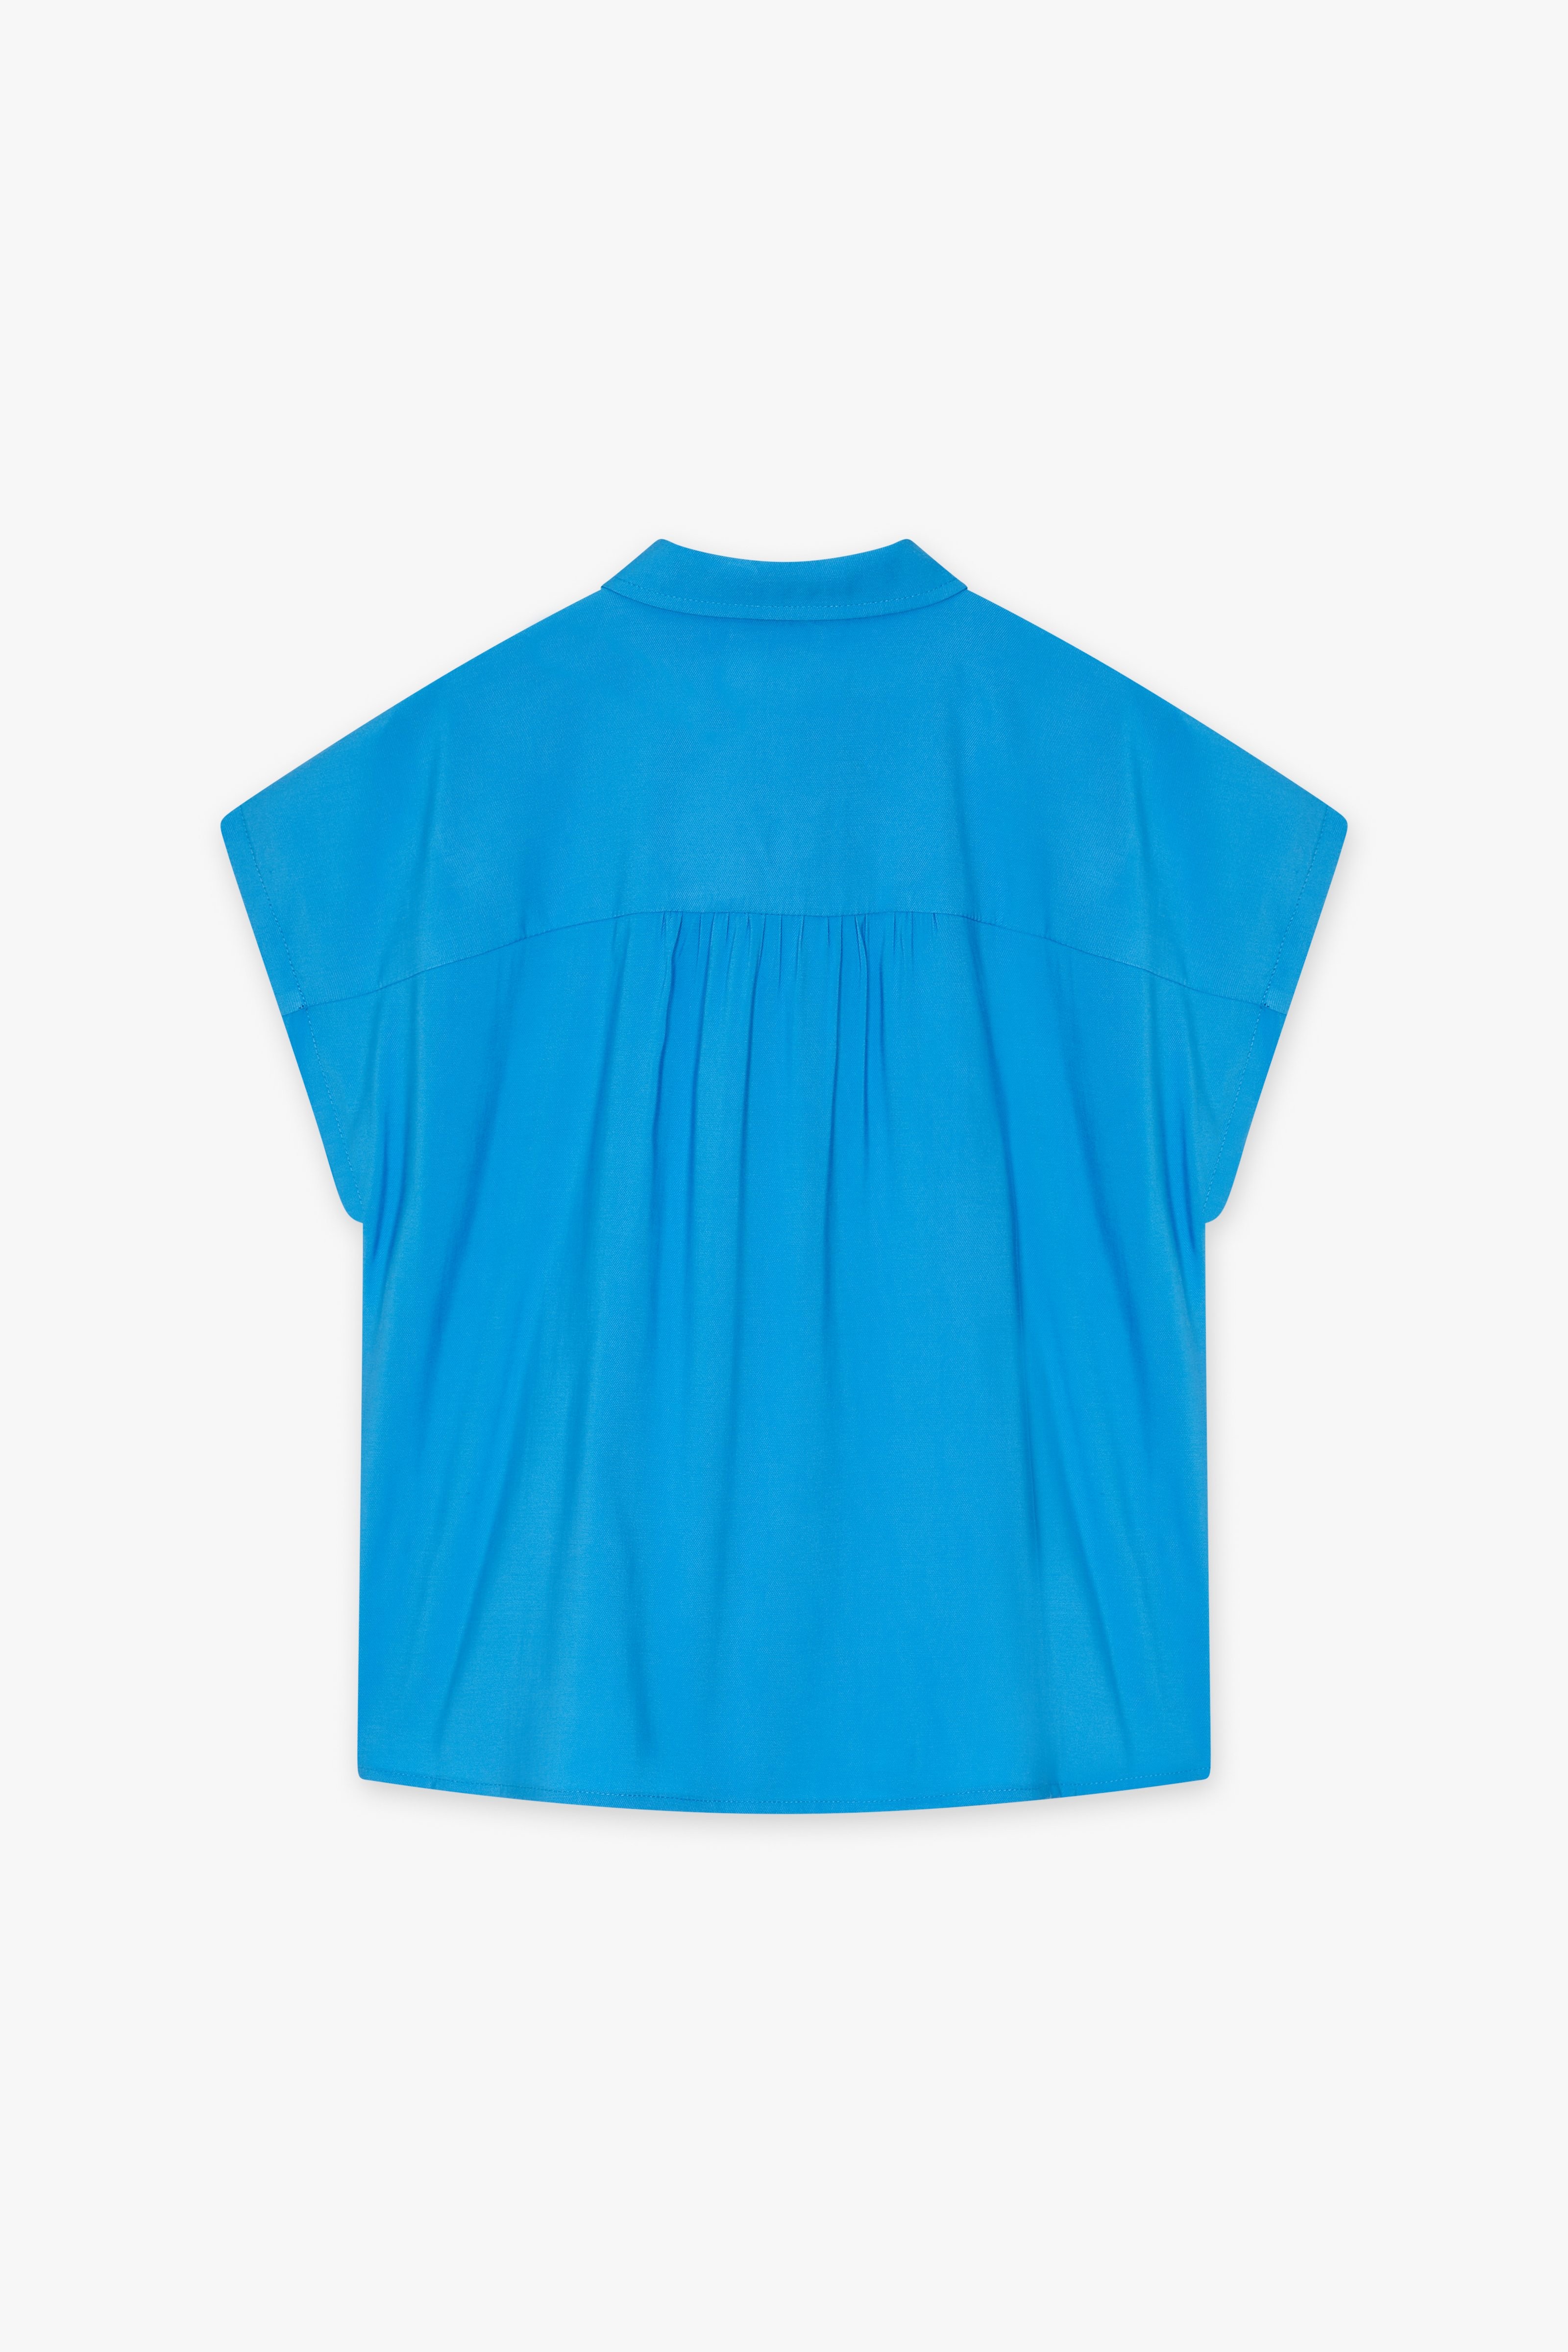 CKS Dames - ECHO - blouse mouwloos - intens blauw